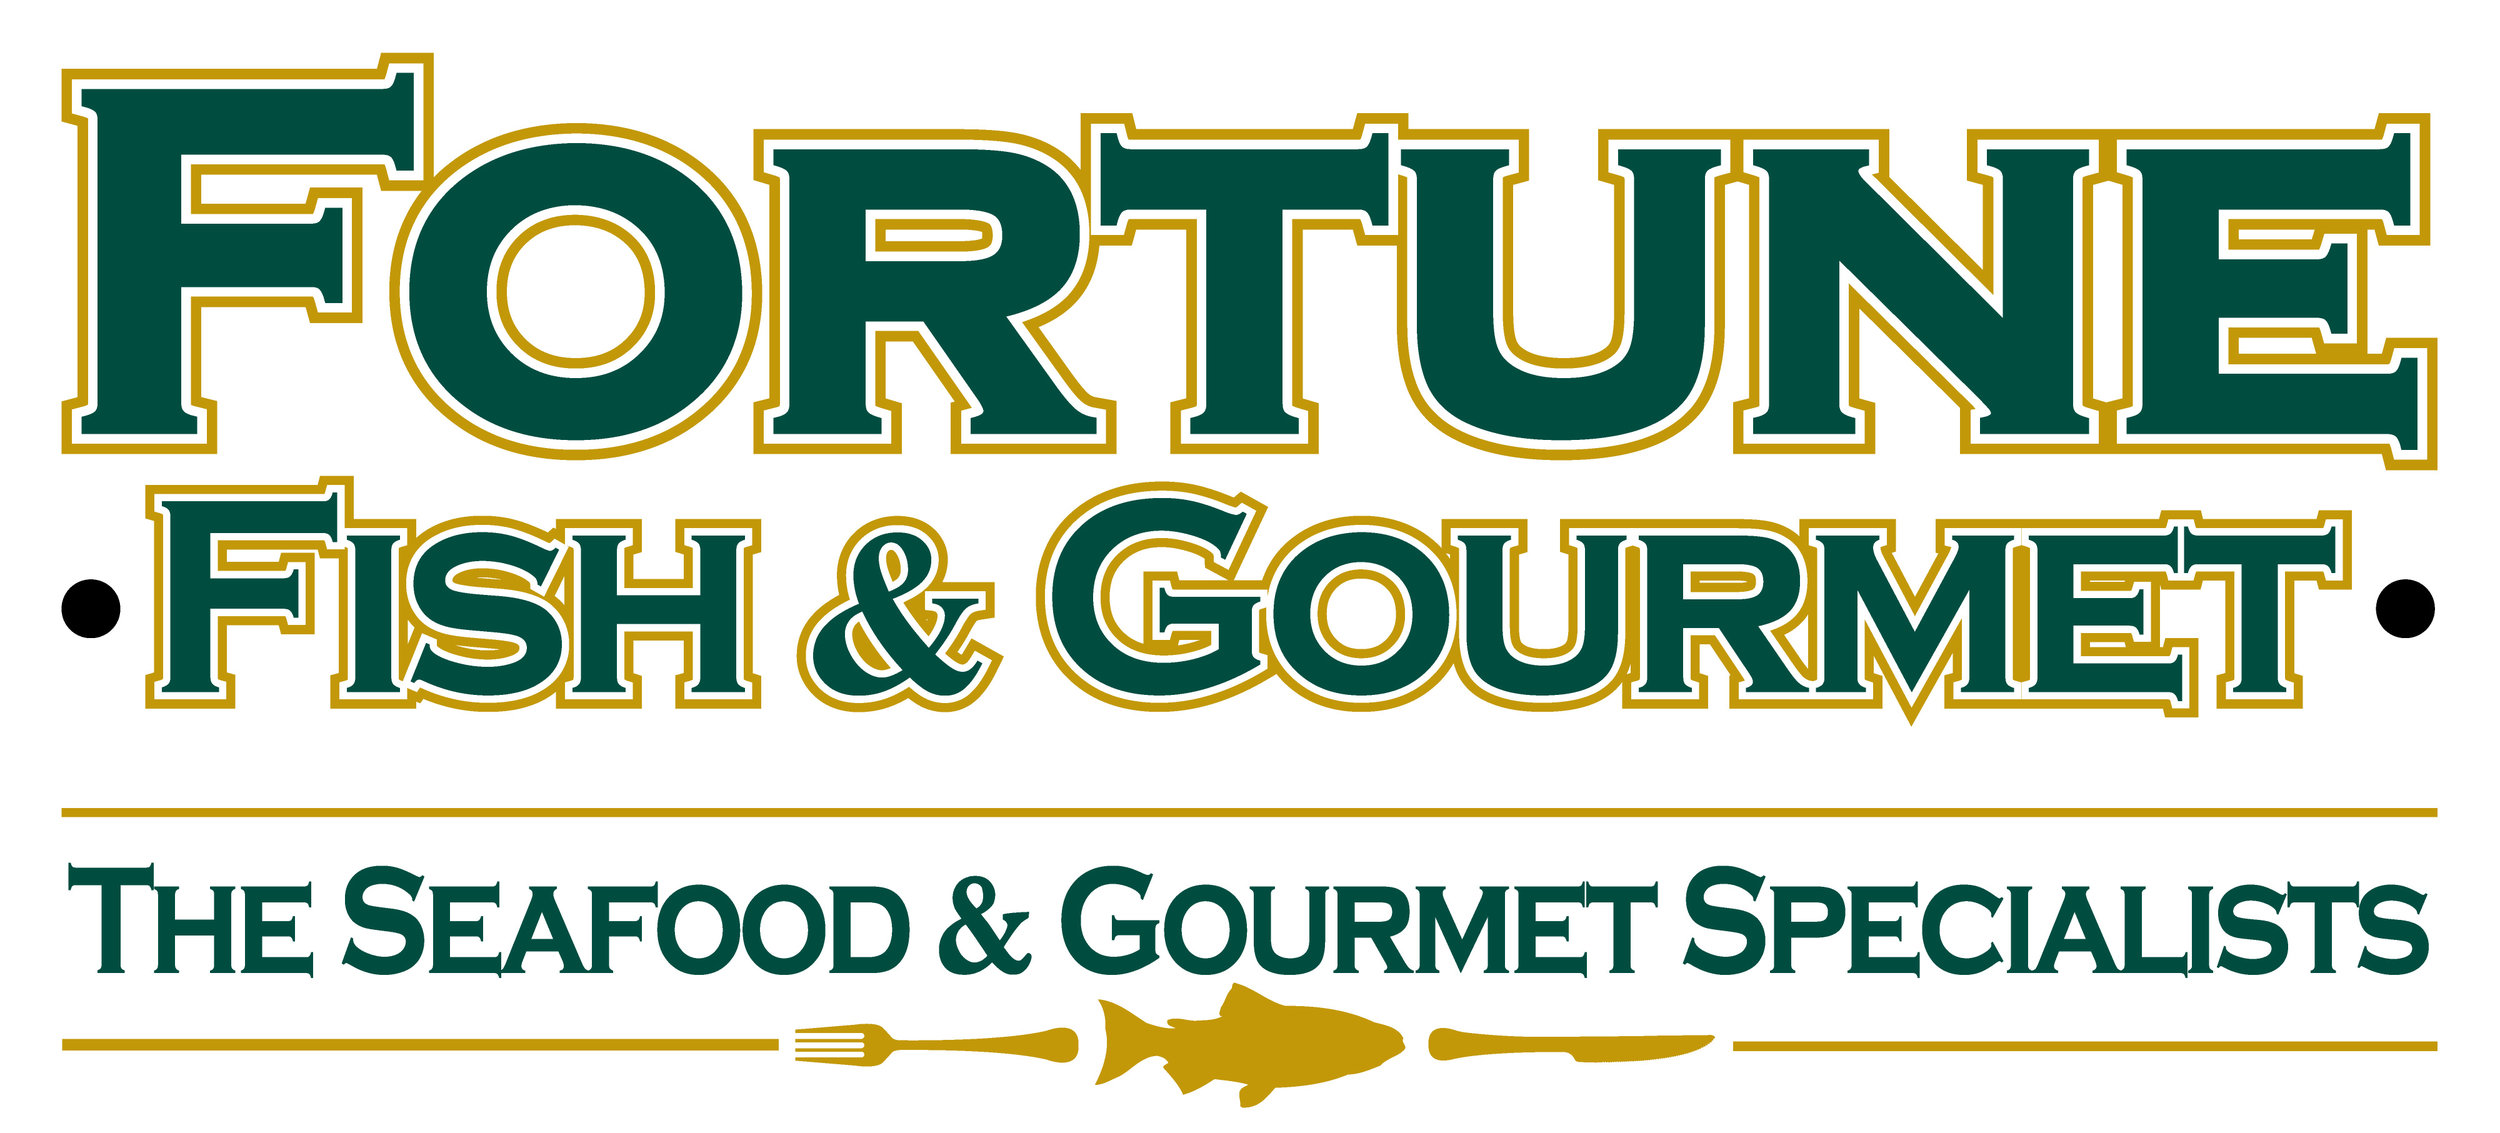 FortuneFish-and-Gourmet-lg.jpg